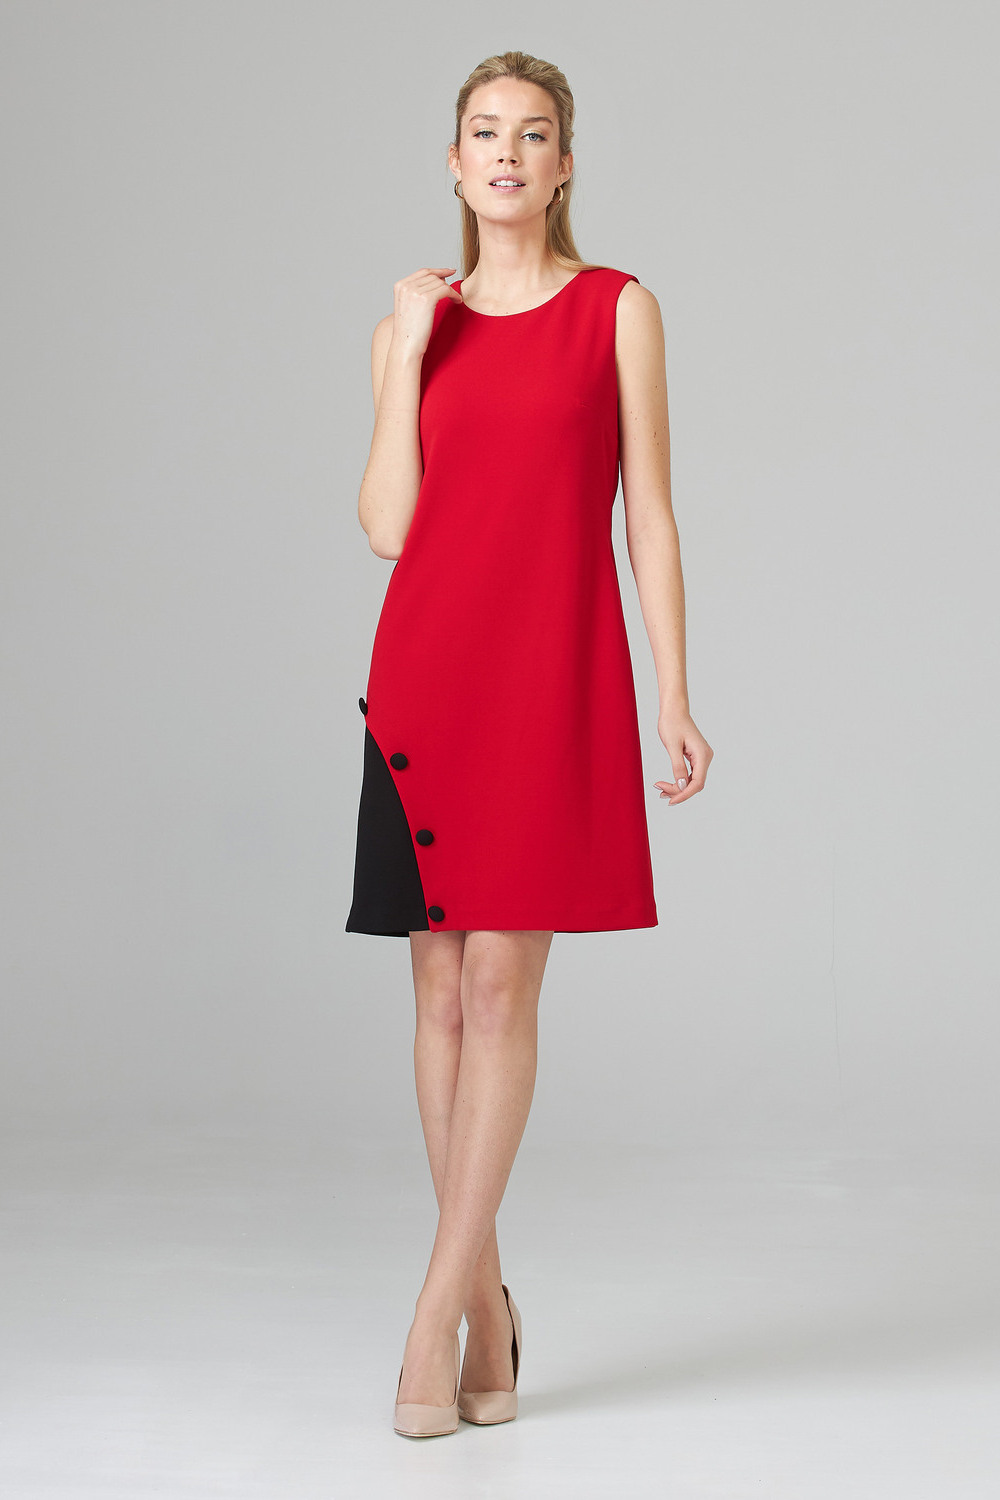 Joseph Ribkoff Dress Style 201266. Lipstick Red/black